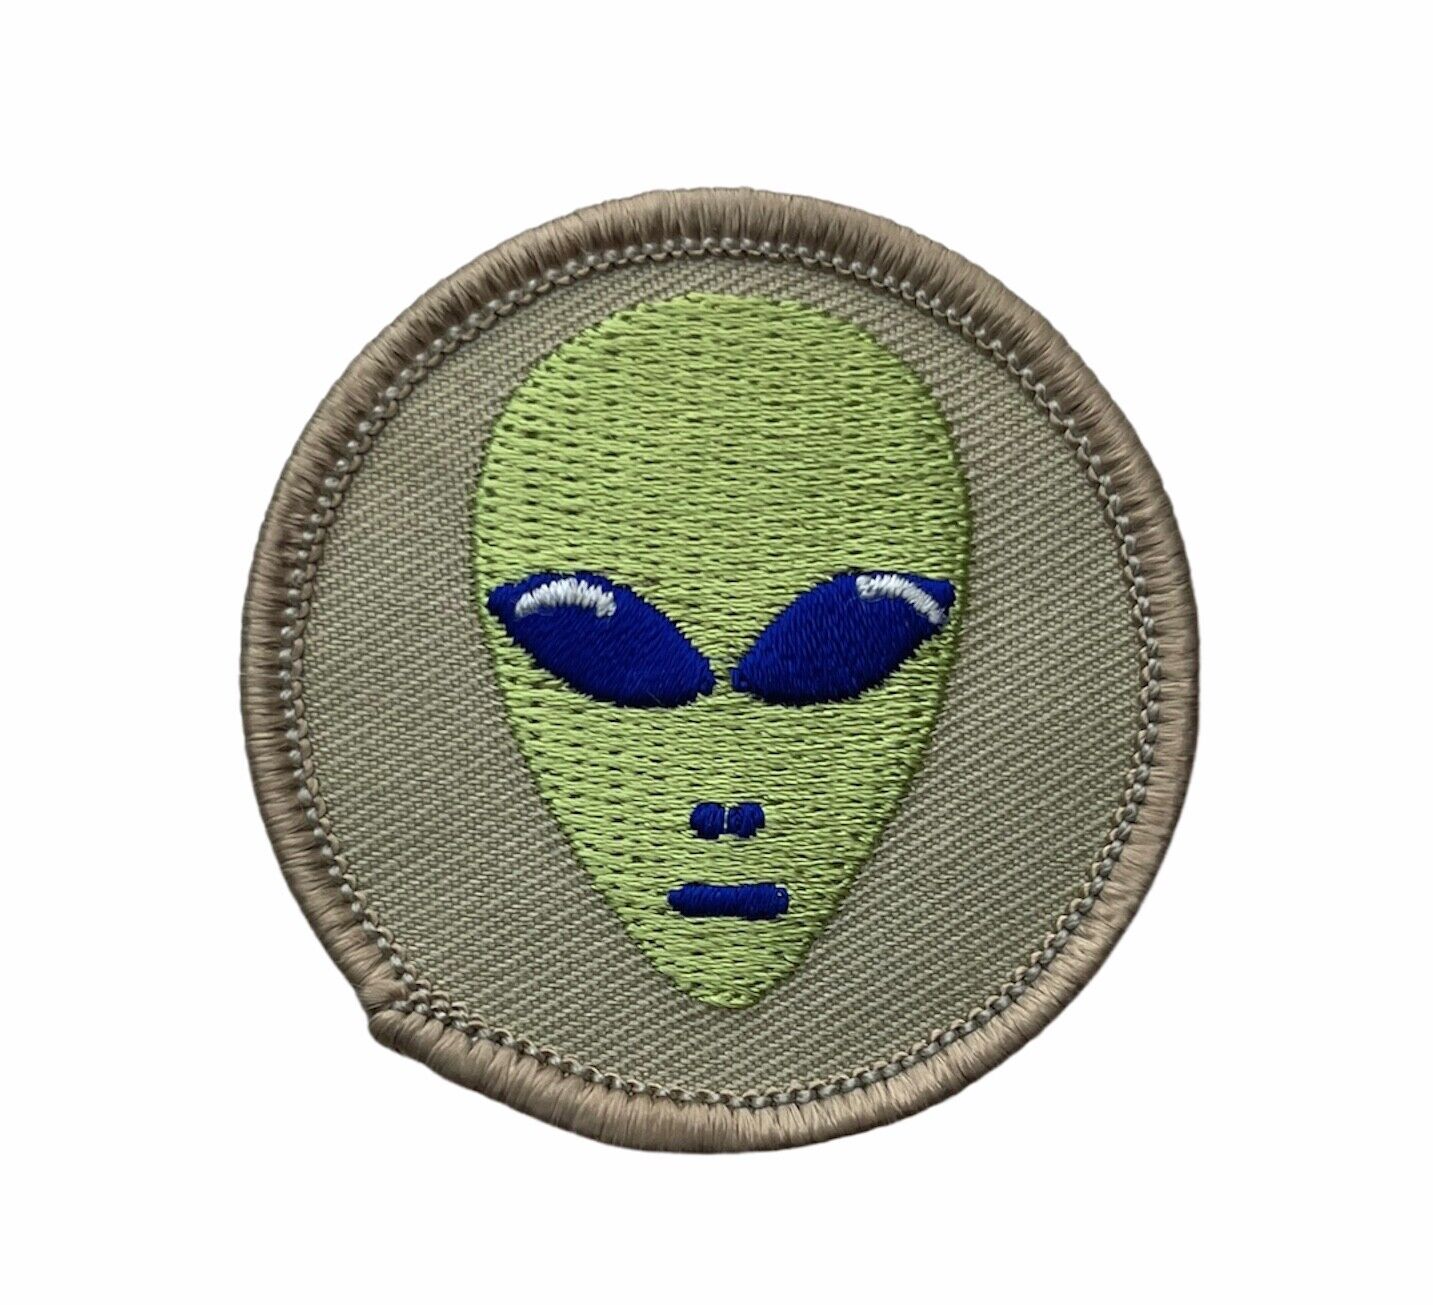 BSA Licensed Green Alien Patrol Badge Scouting 2 inch patch AVA0056 F6D28U